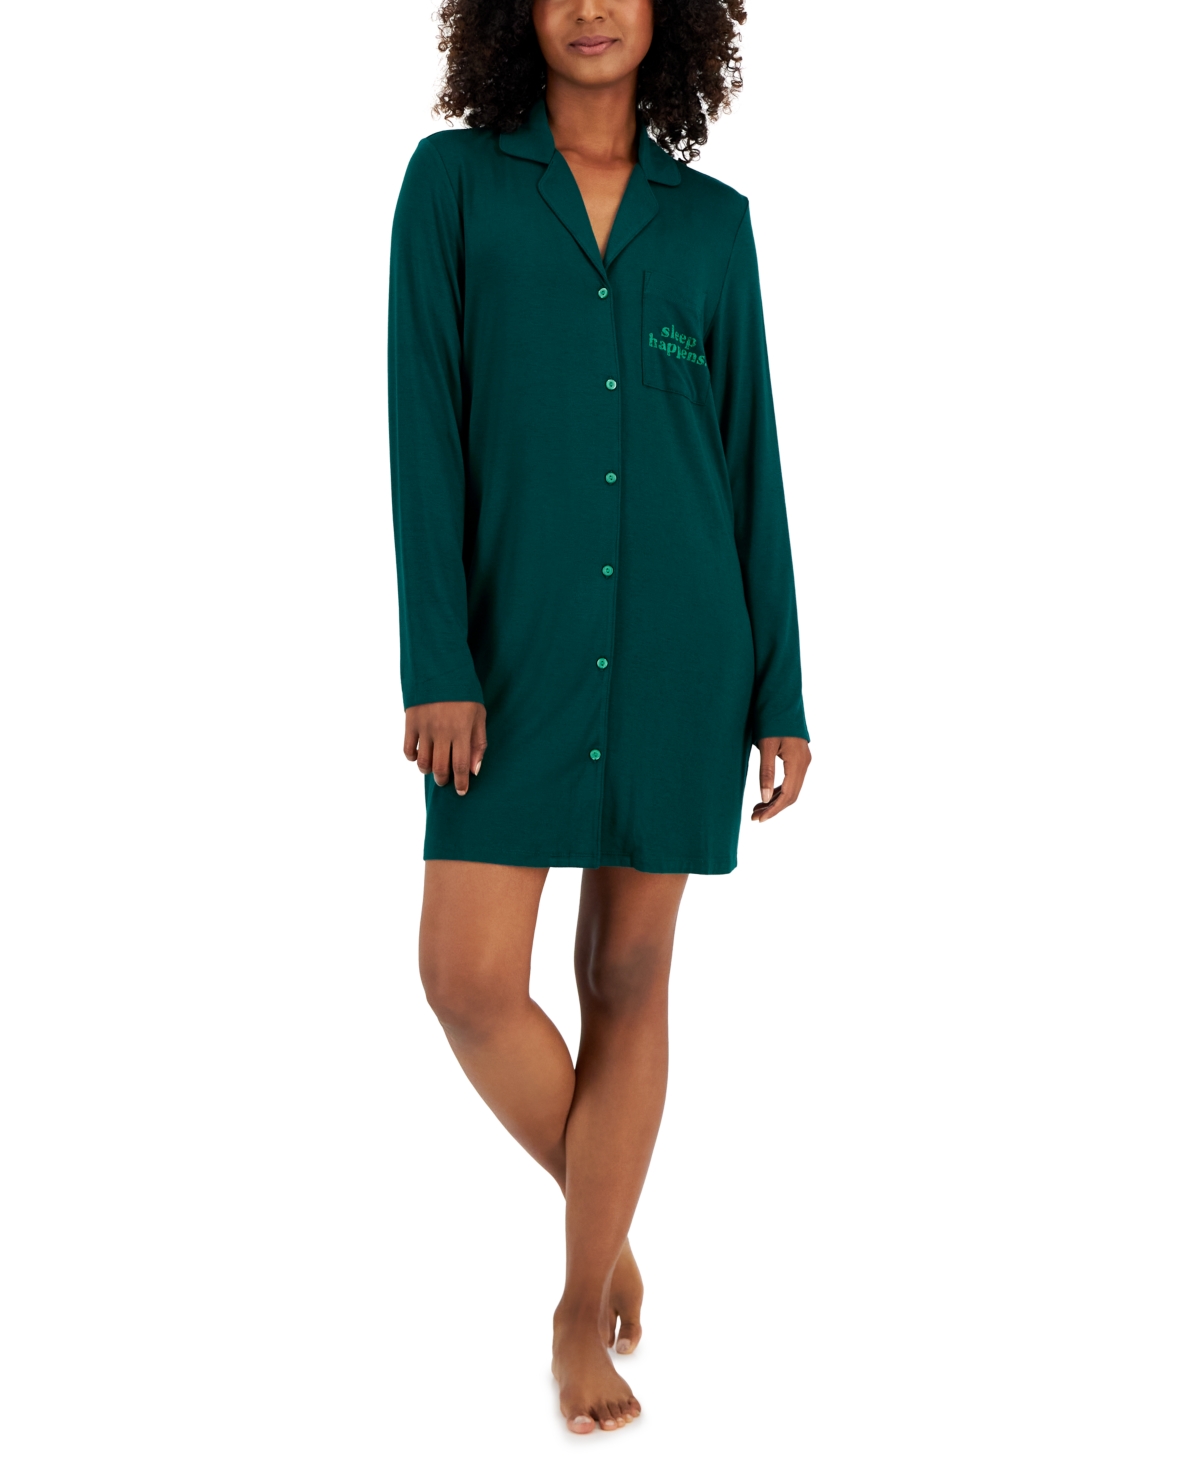 Women's Notched-Collar Long-Sleeve Sleepshirt, Created for Macy's - Smiley